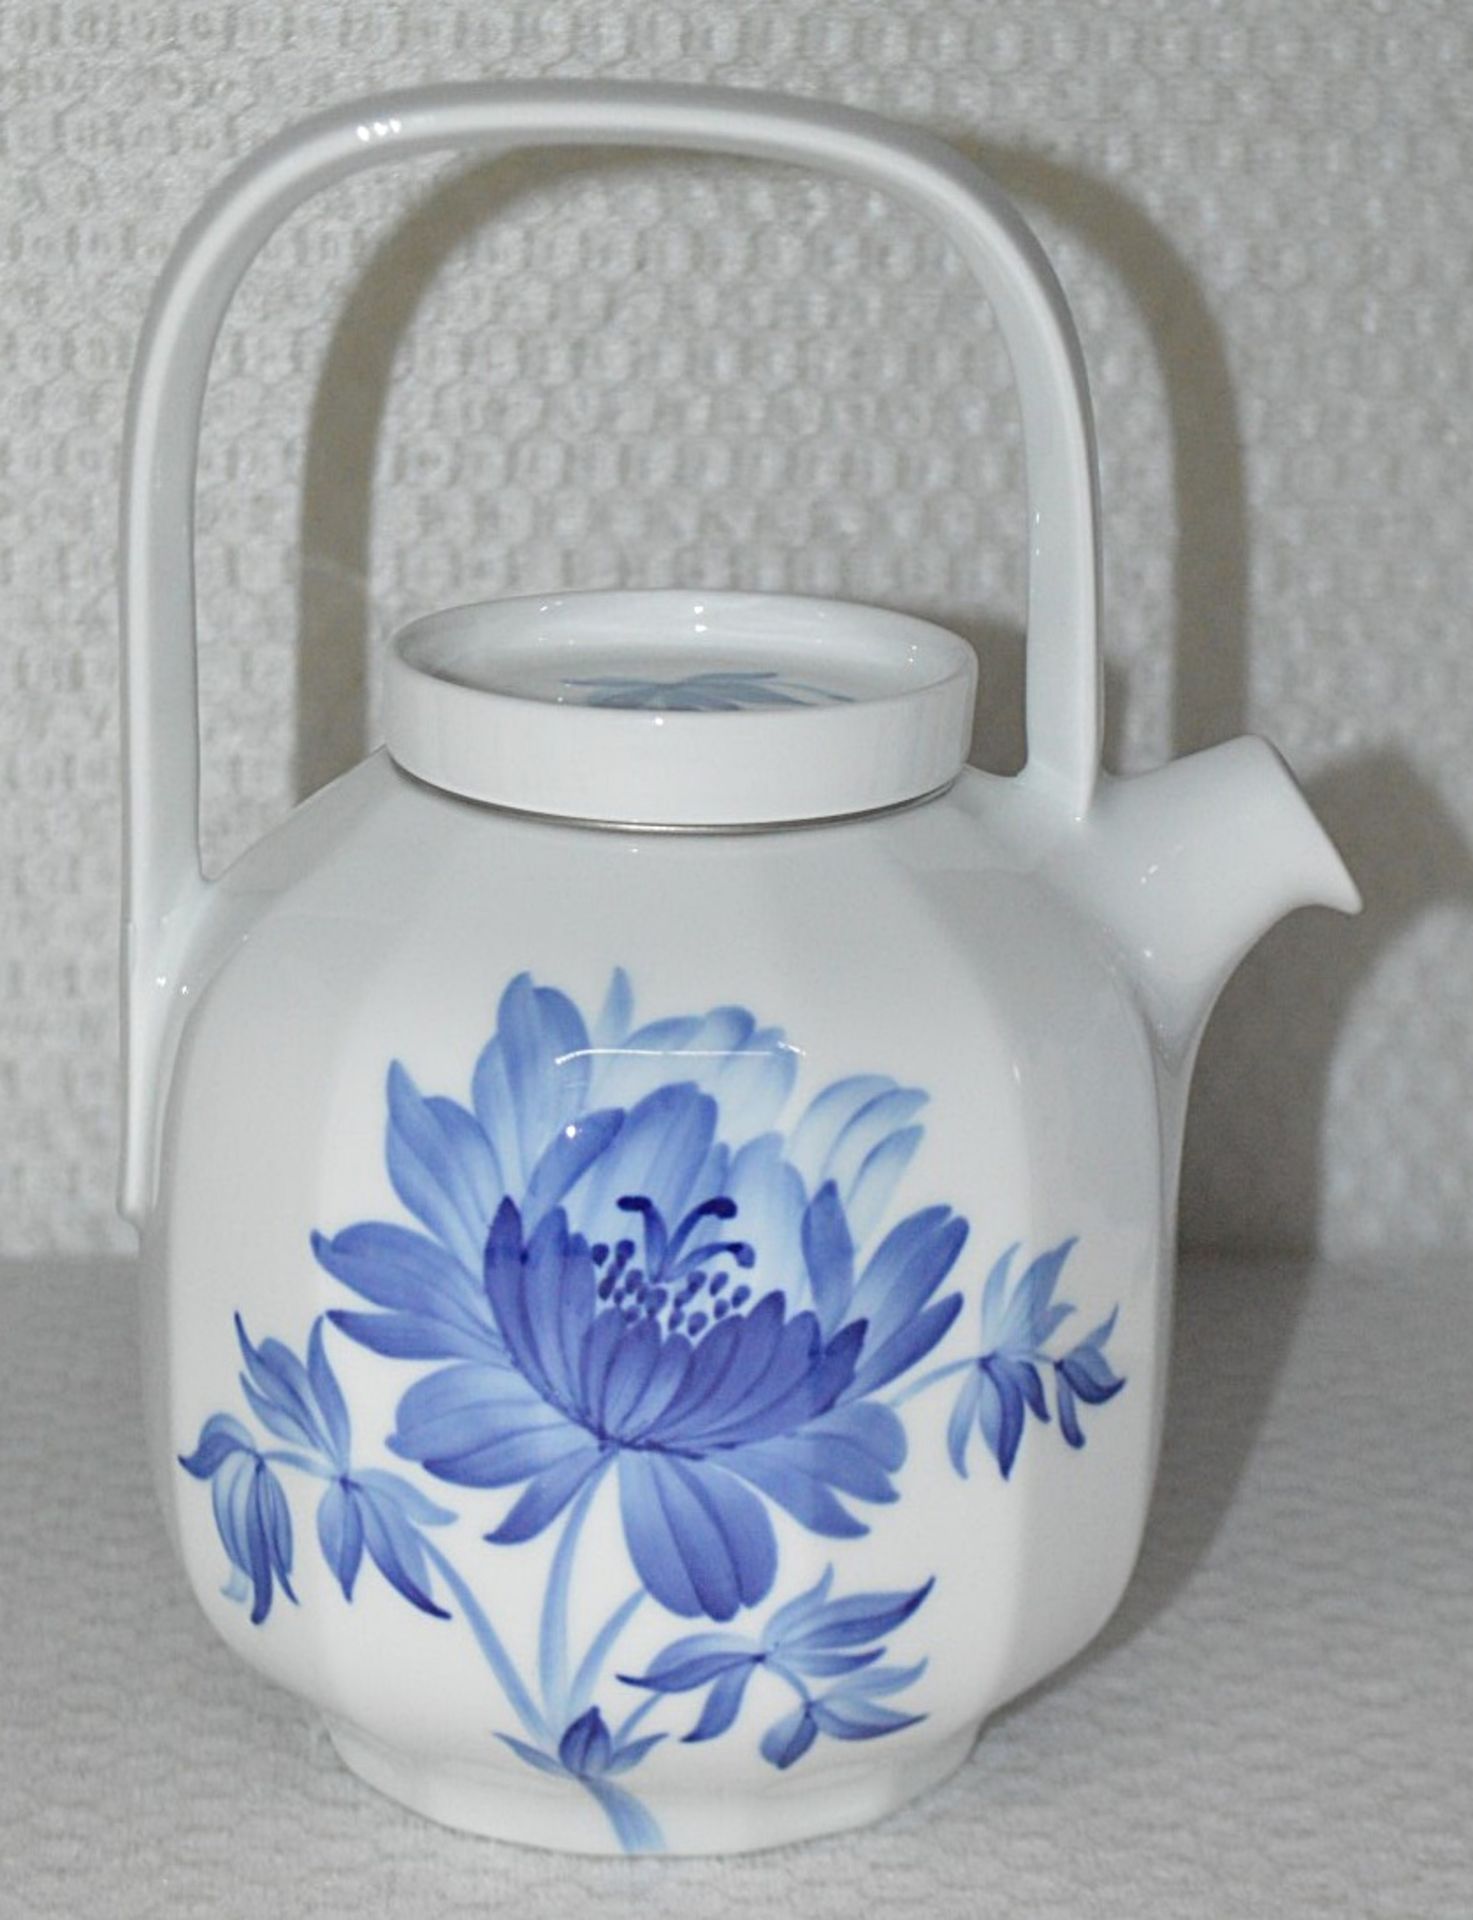 1 x ROYAL COPENHAGEN Blomst 'Blue Peony Tree' Porcelain Teapot - Original Price £142.00 - Read - Image 4 of 4